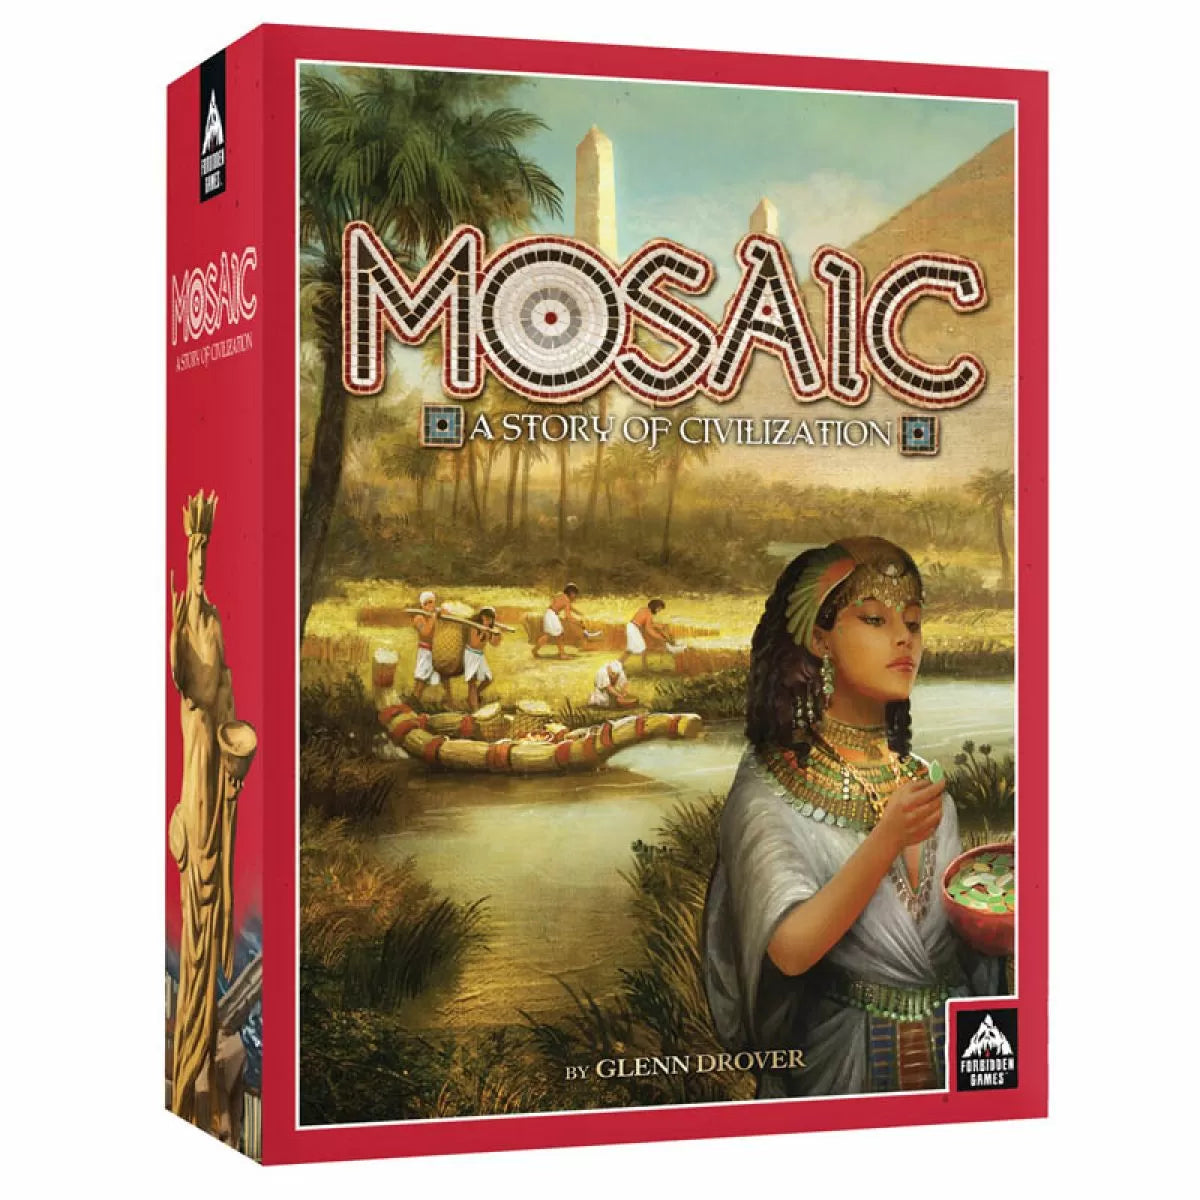 Mosaic - A Story of Civilisation